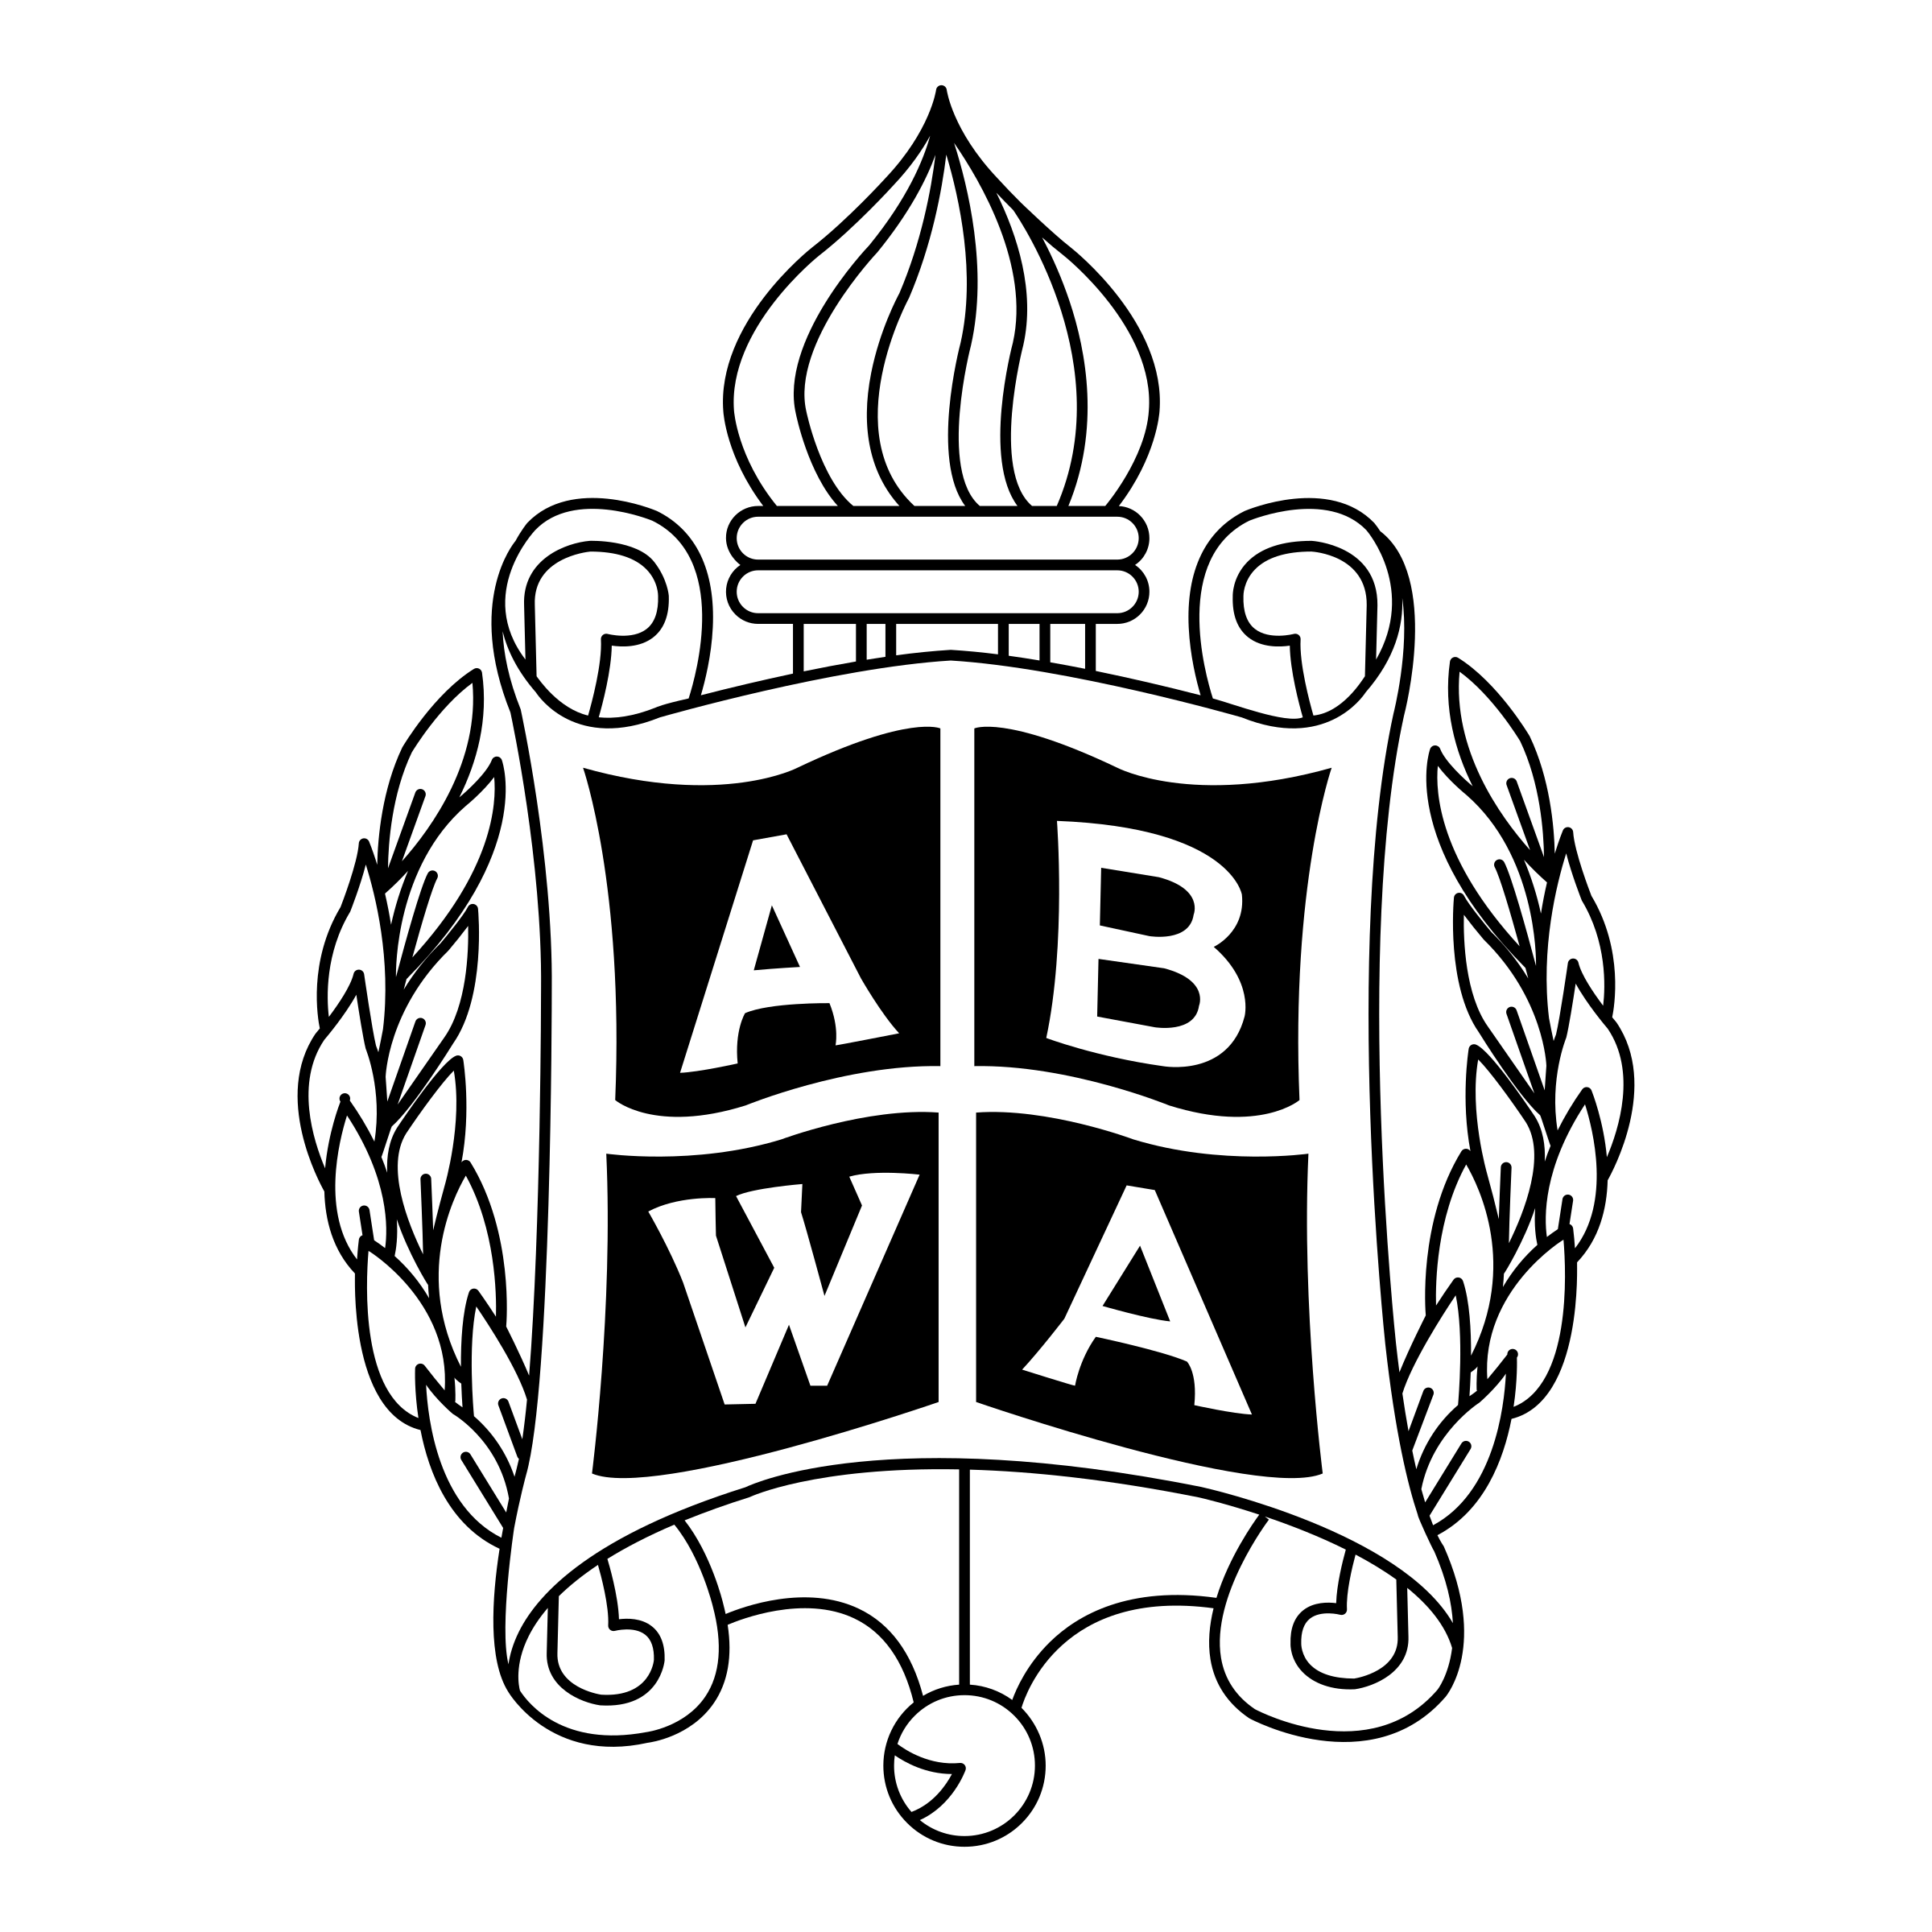 ABWA Logo - ABWA Logo PNG Transparent & SVG Vector - Freebie Supply